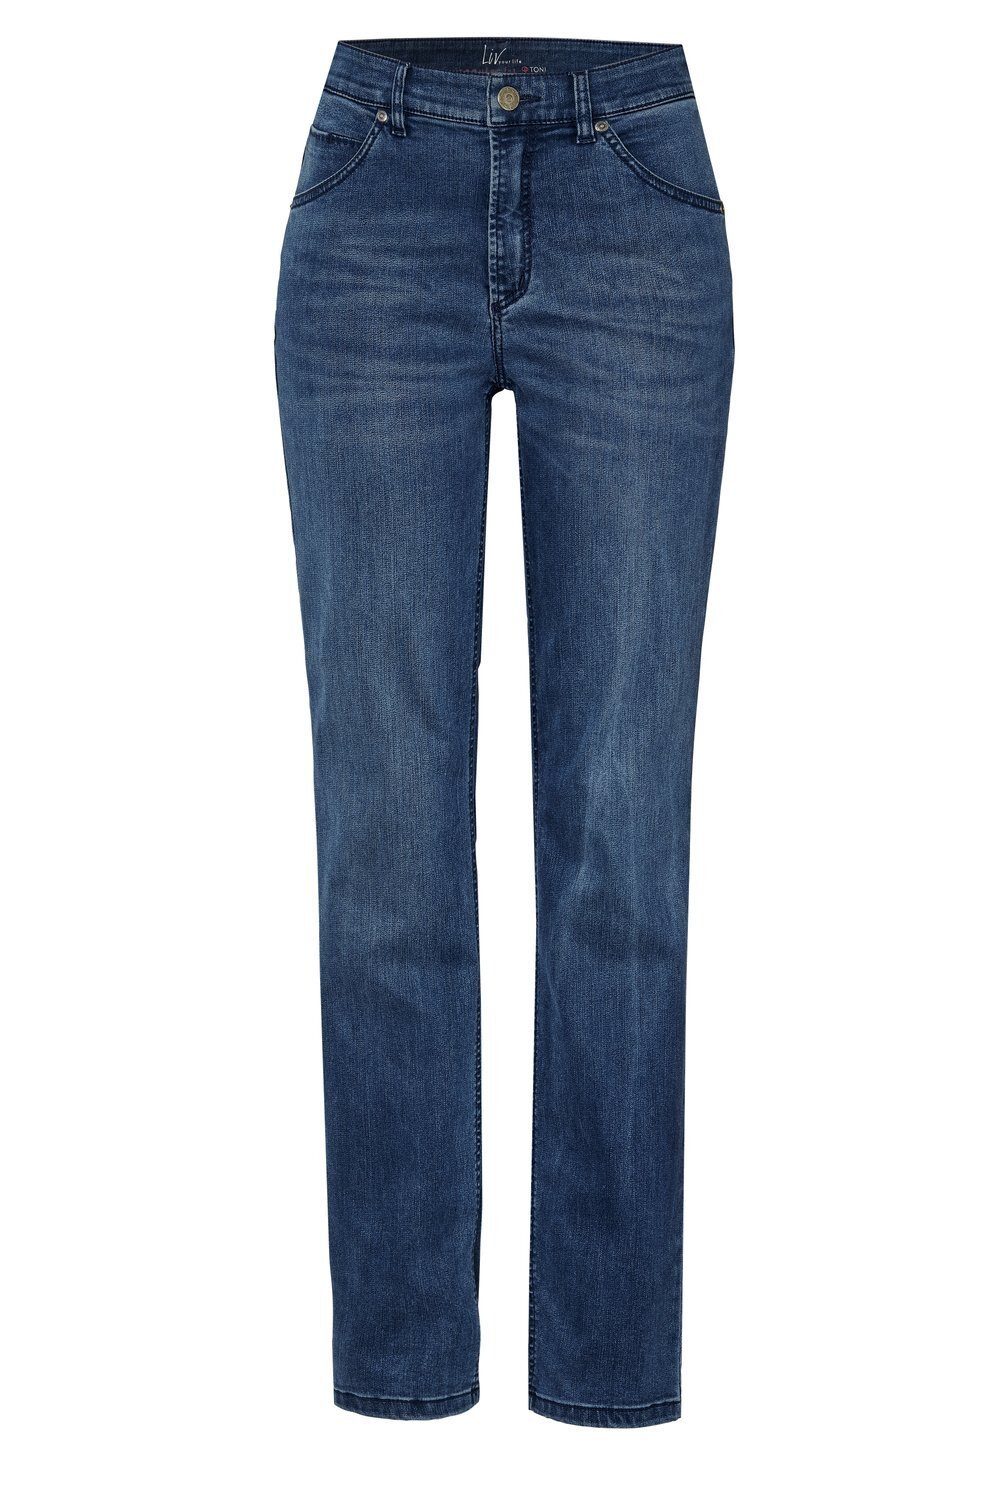 Regular-Fit in 554 Regular-fit-Jeans - TONI blau Liv